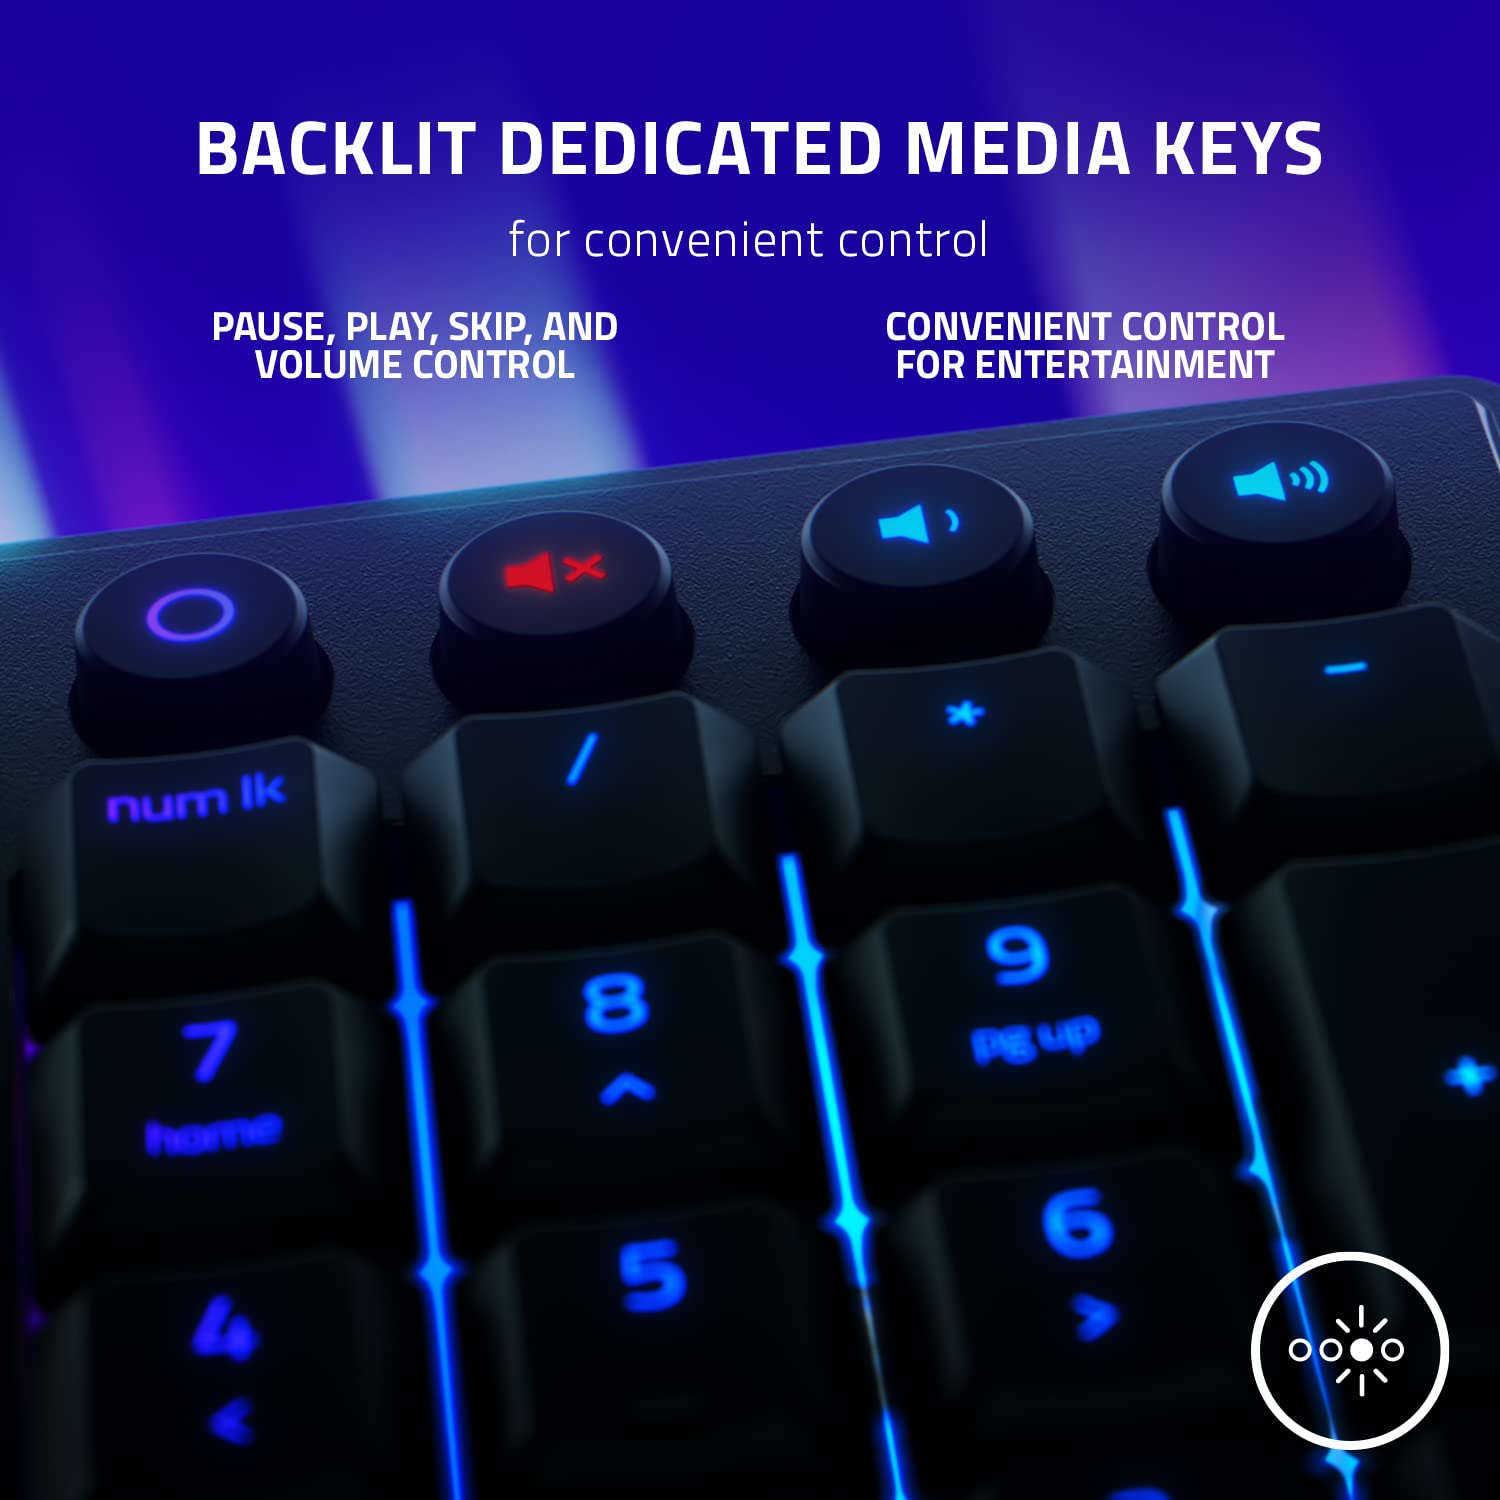 Razer Ornata V3 Gaming Keyboard: Low-Profile Keys-Mecha-Membrane Switches-Uv-Coated Keycaps-Backlit Media Keys-10-Zone Rgb Lighting-Spill-Resistant-Magnetic Wrist Wrest-Classic Black,Usb,Wired